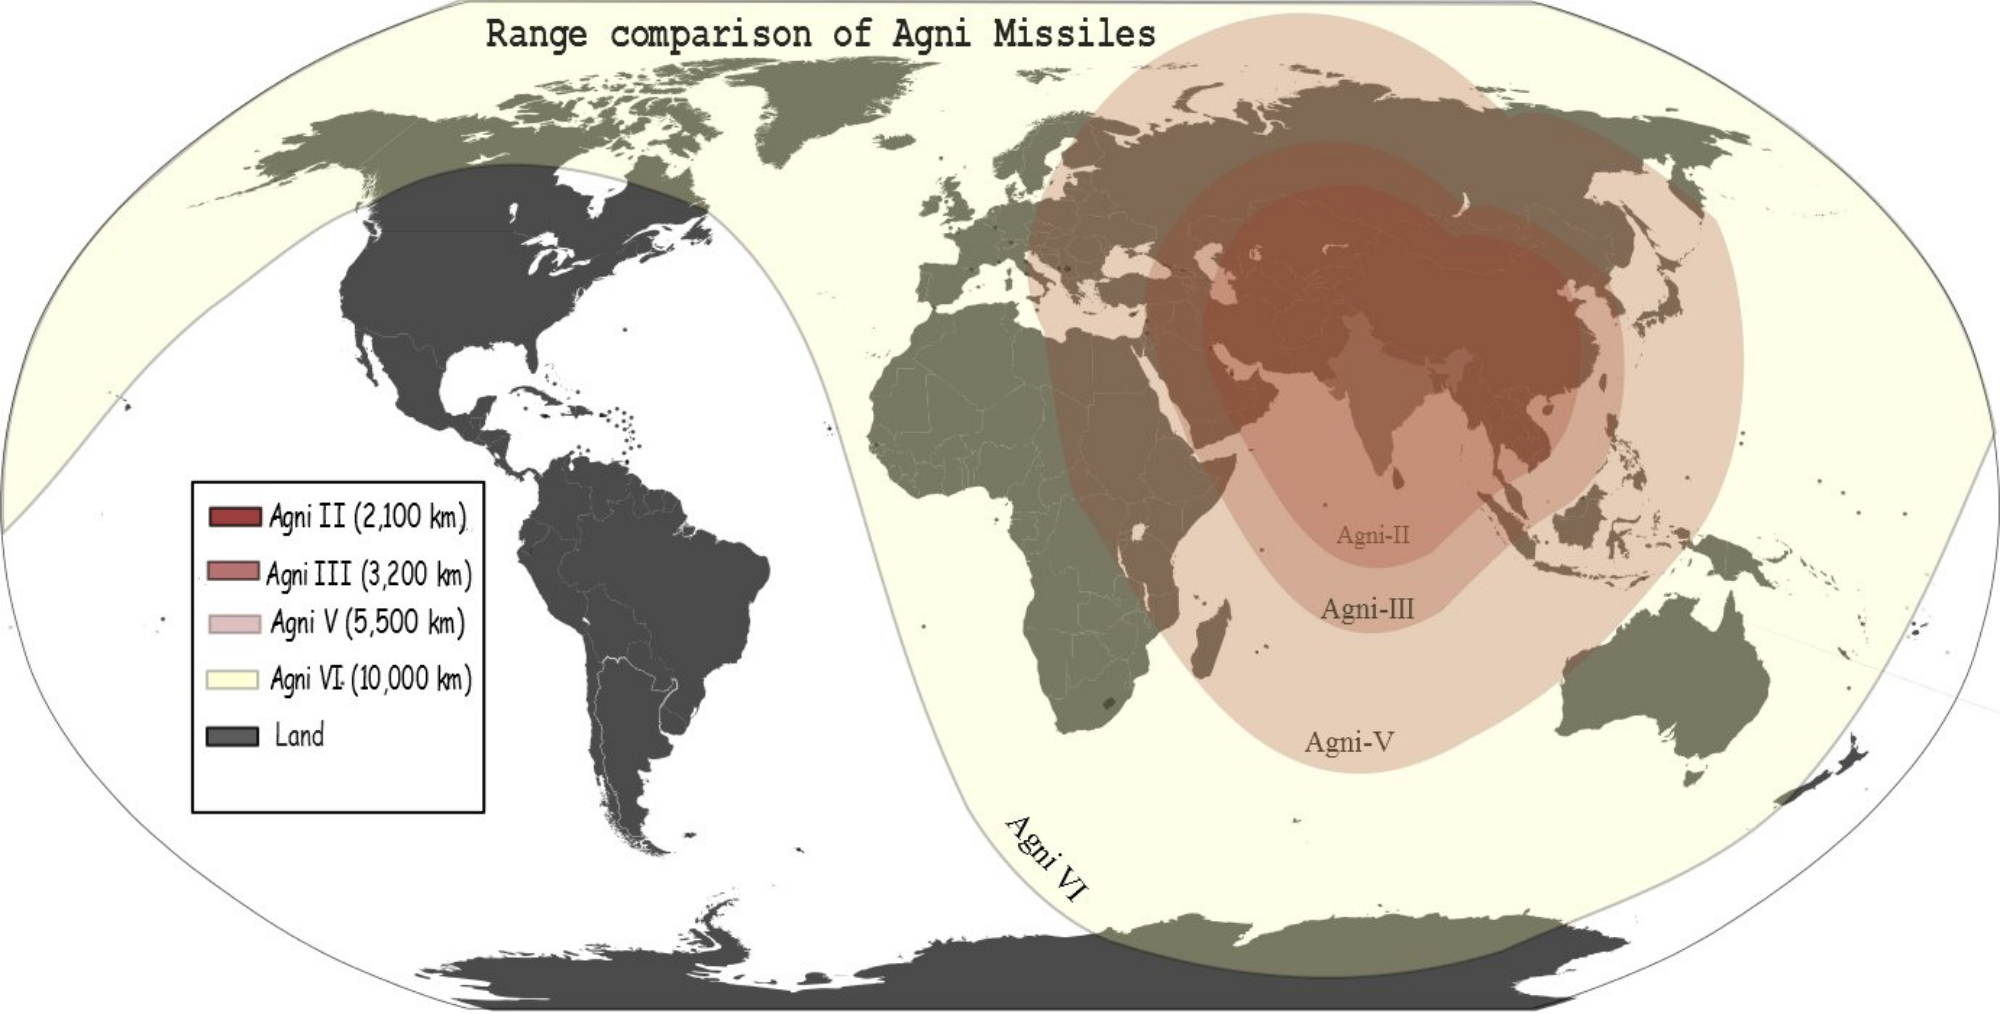 Agni Missile Range comparison